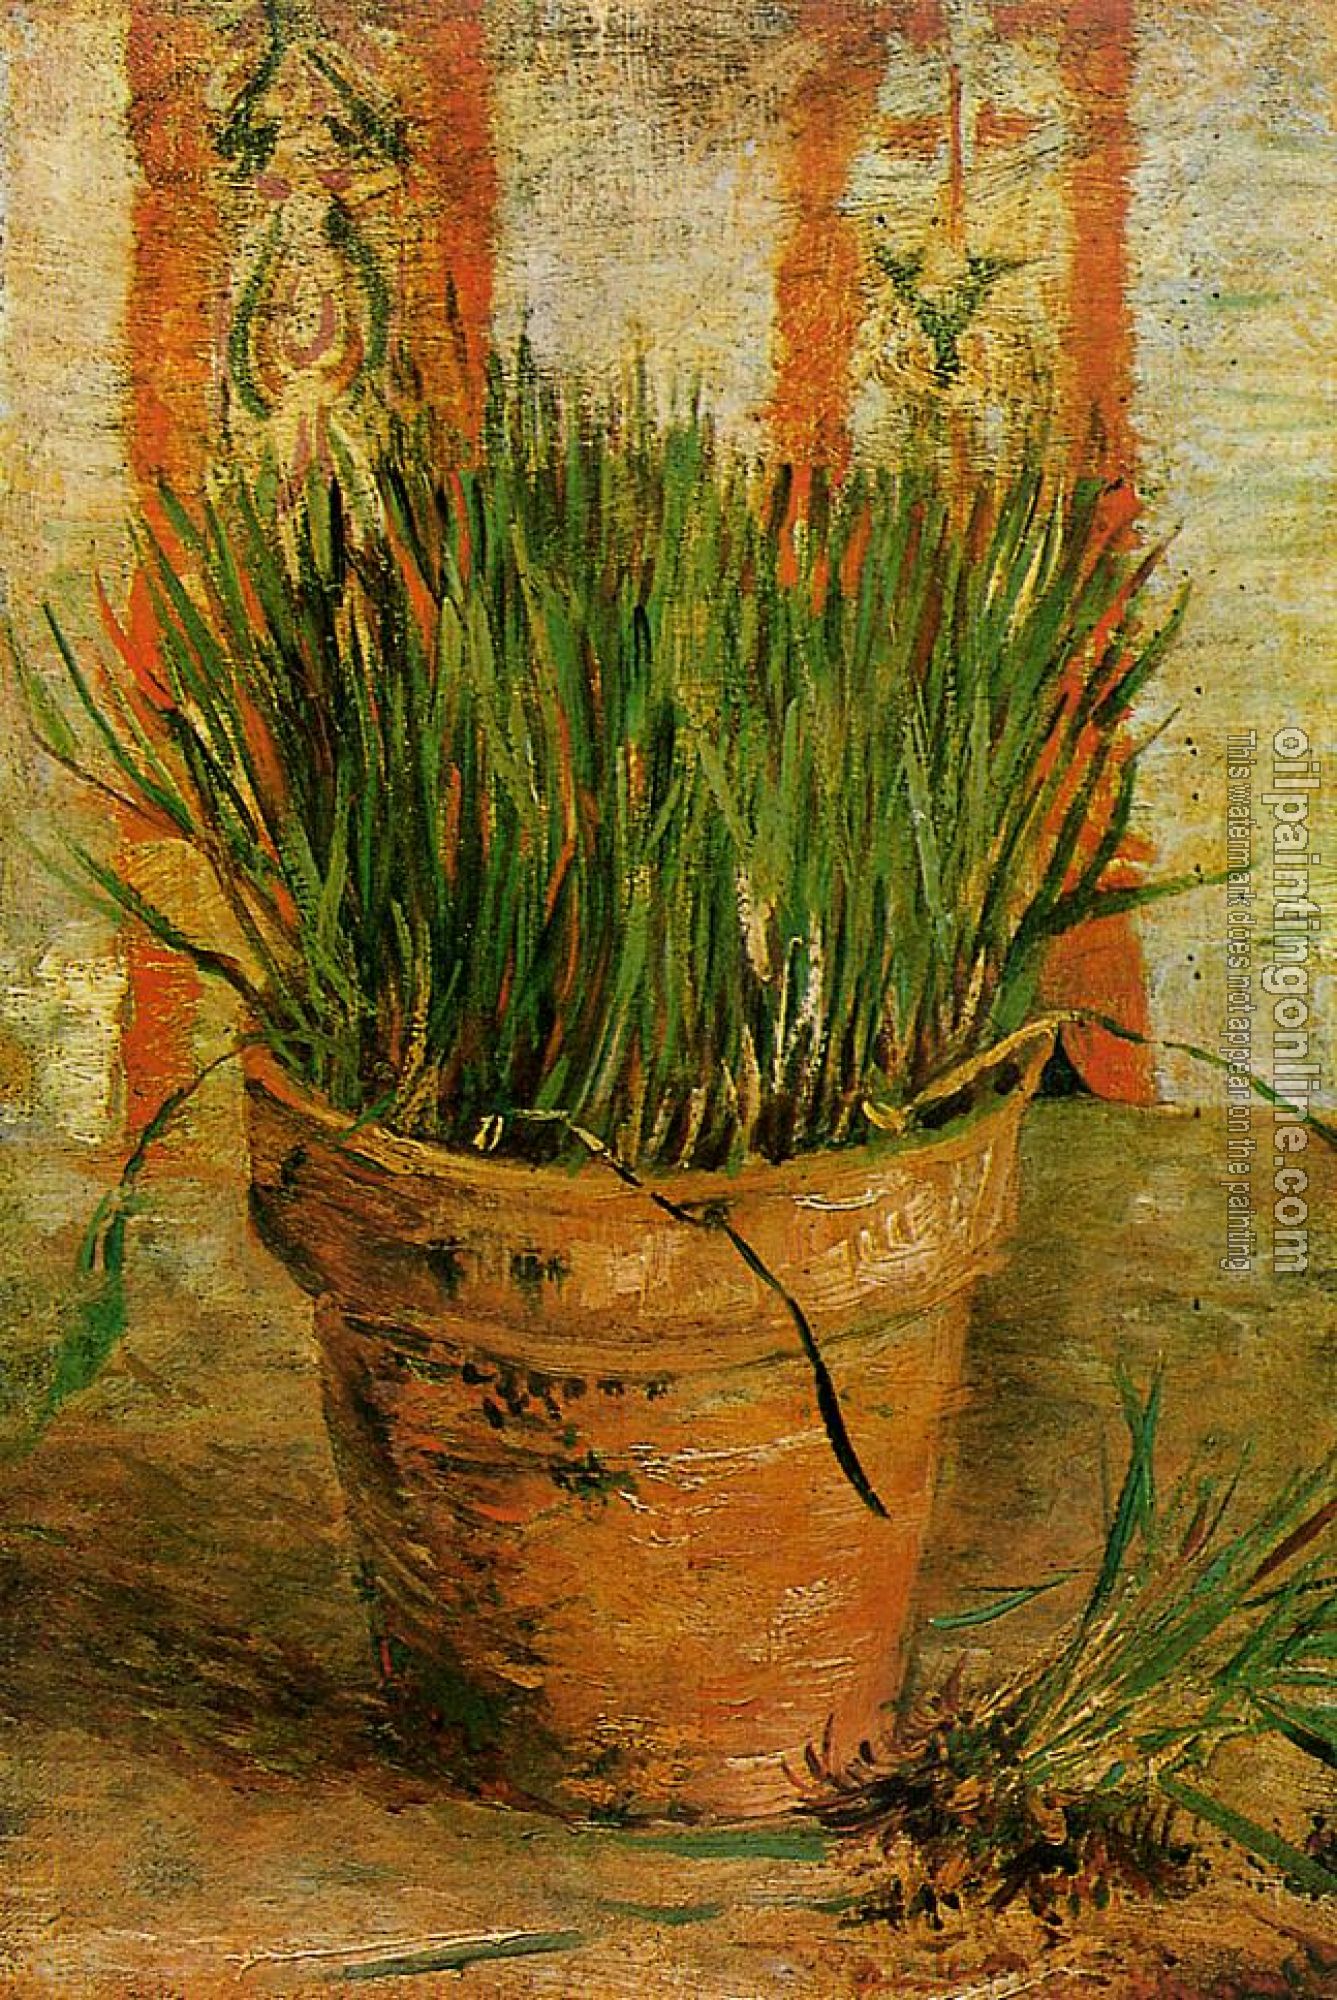 Gogh, Vincent van - Flowerpot with Chives